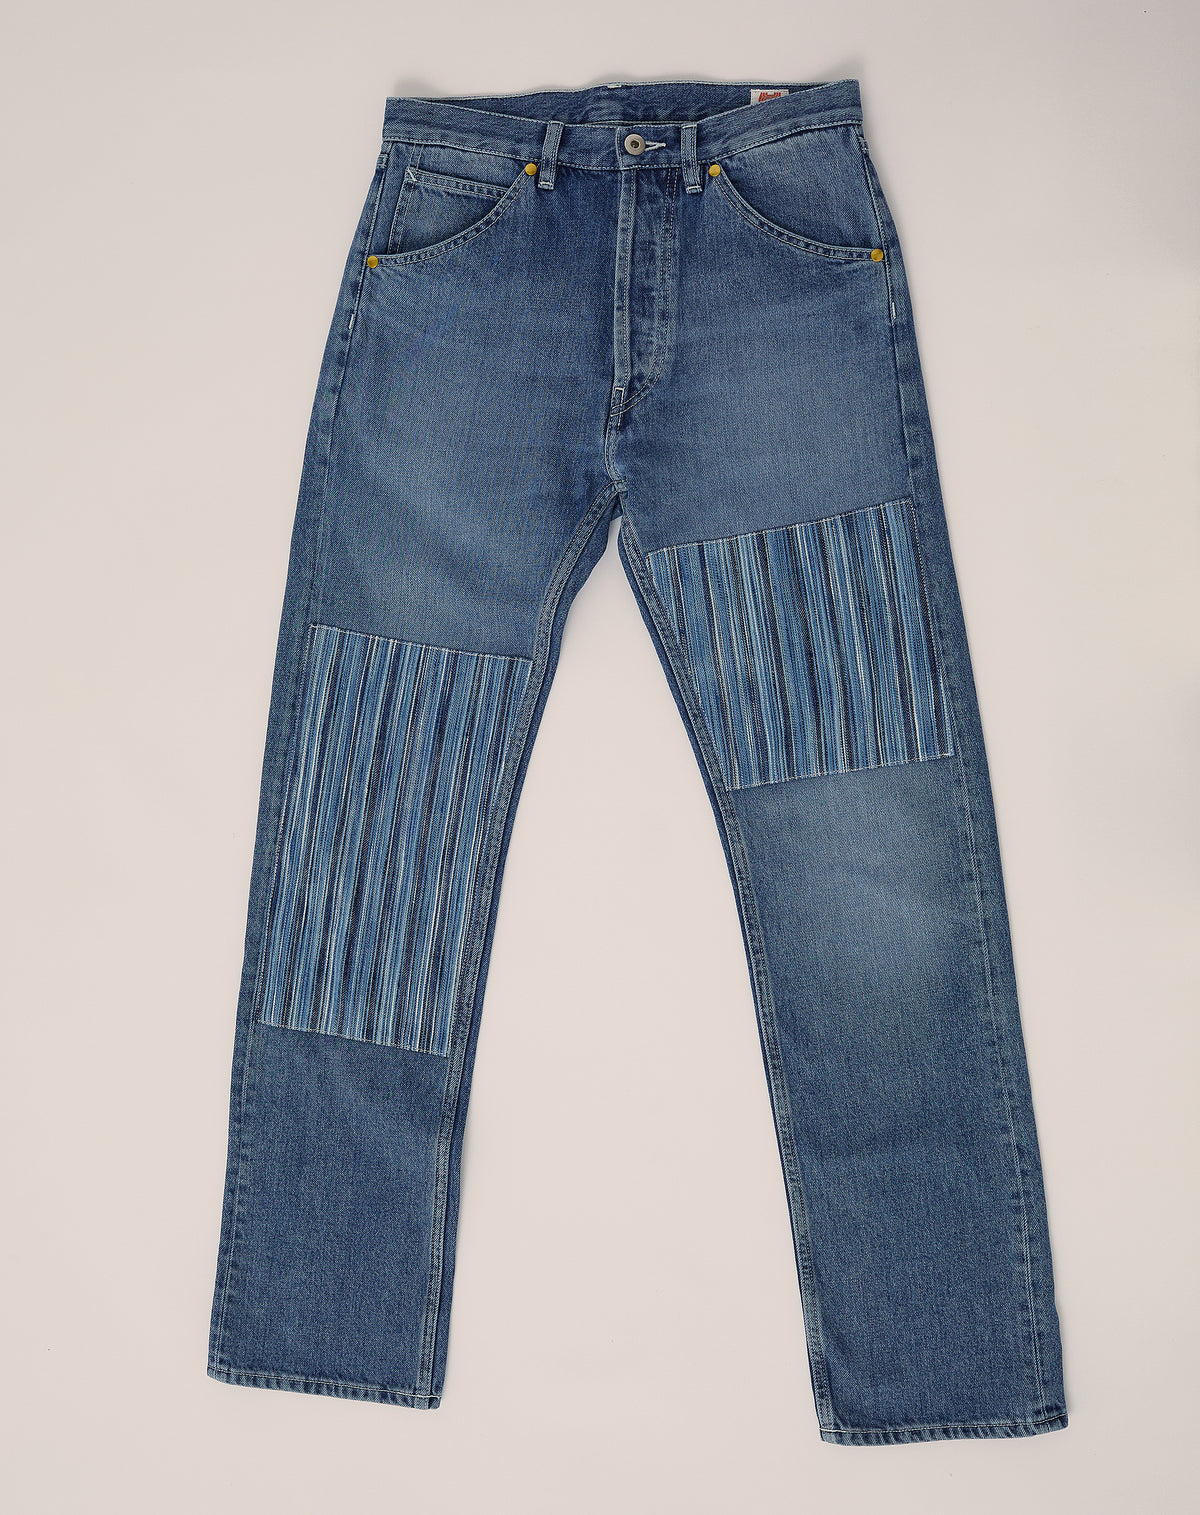 Patchwork Jean - Vintage Wash / Striped Weave